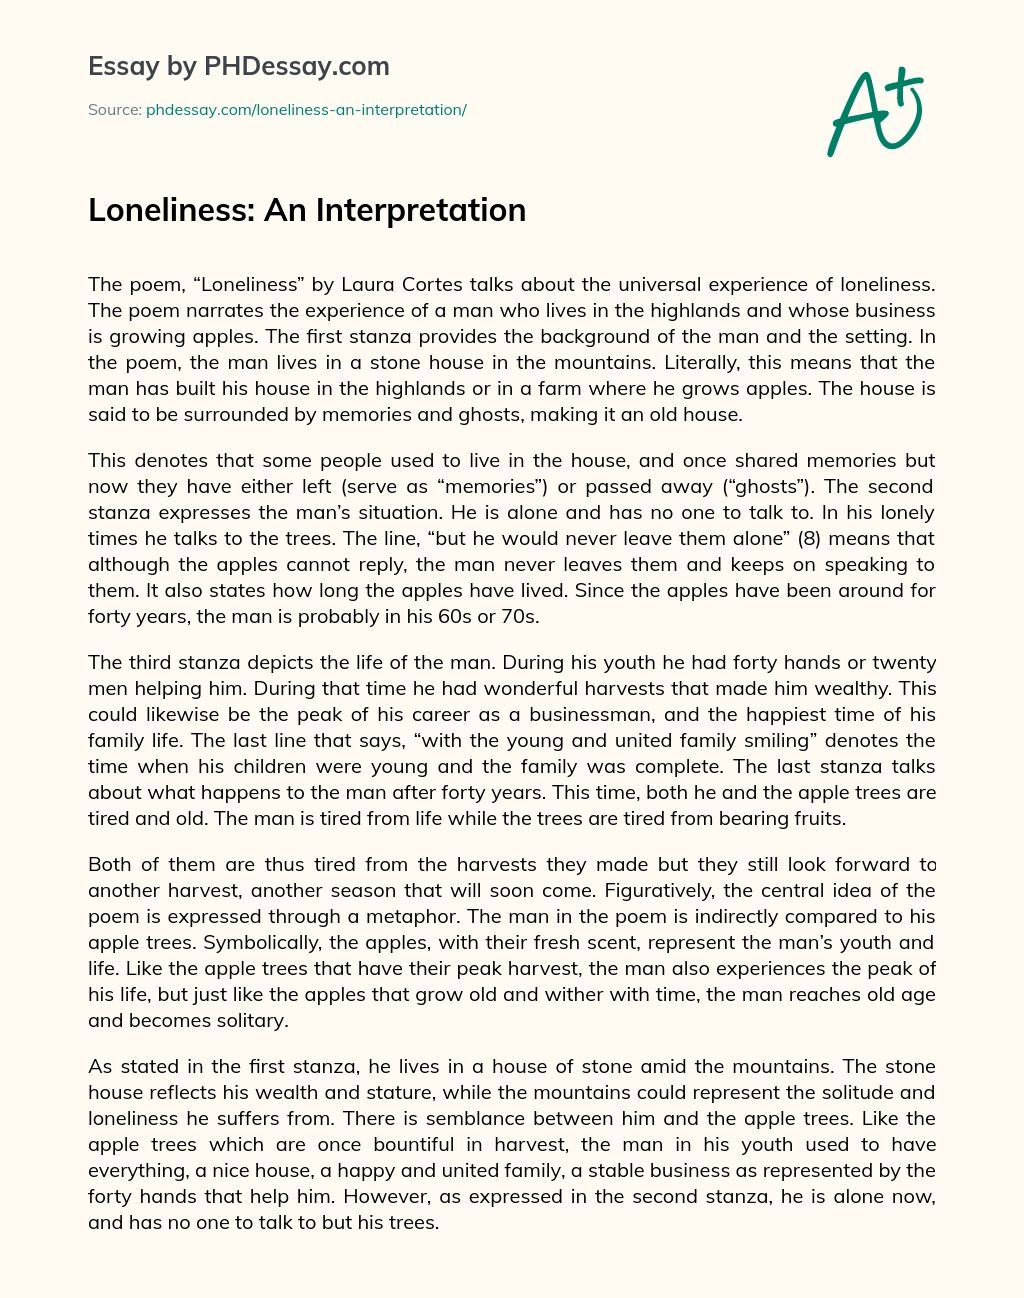 Loneliness: An Interpretation essay